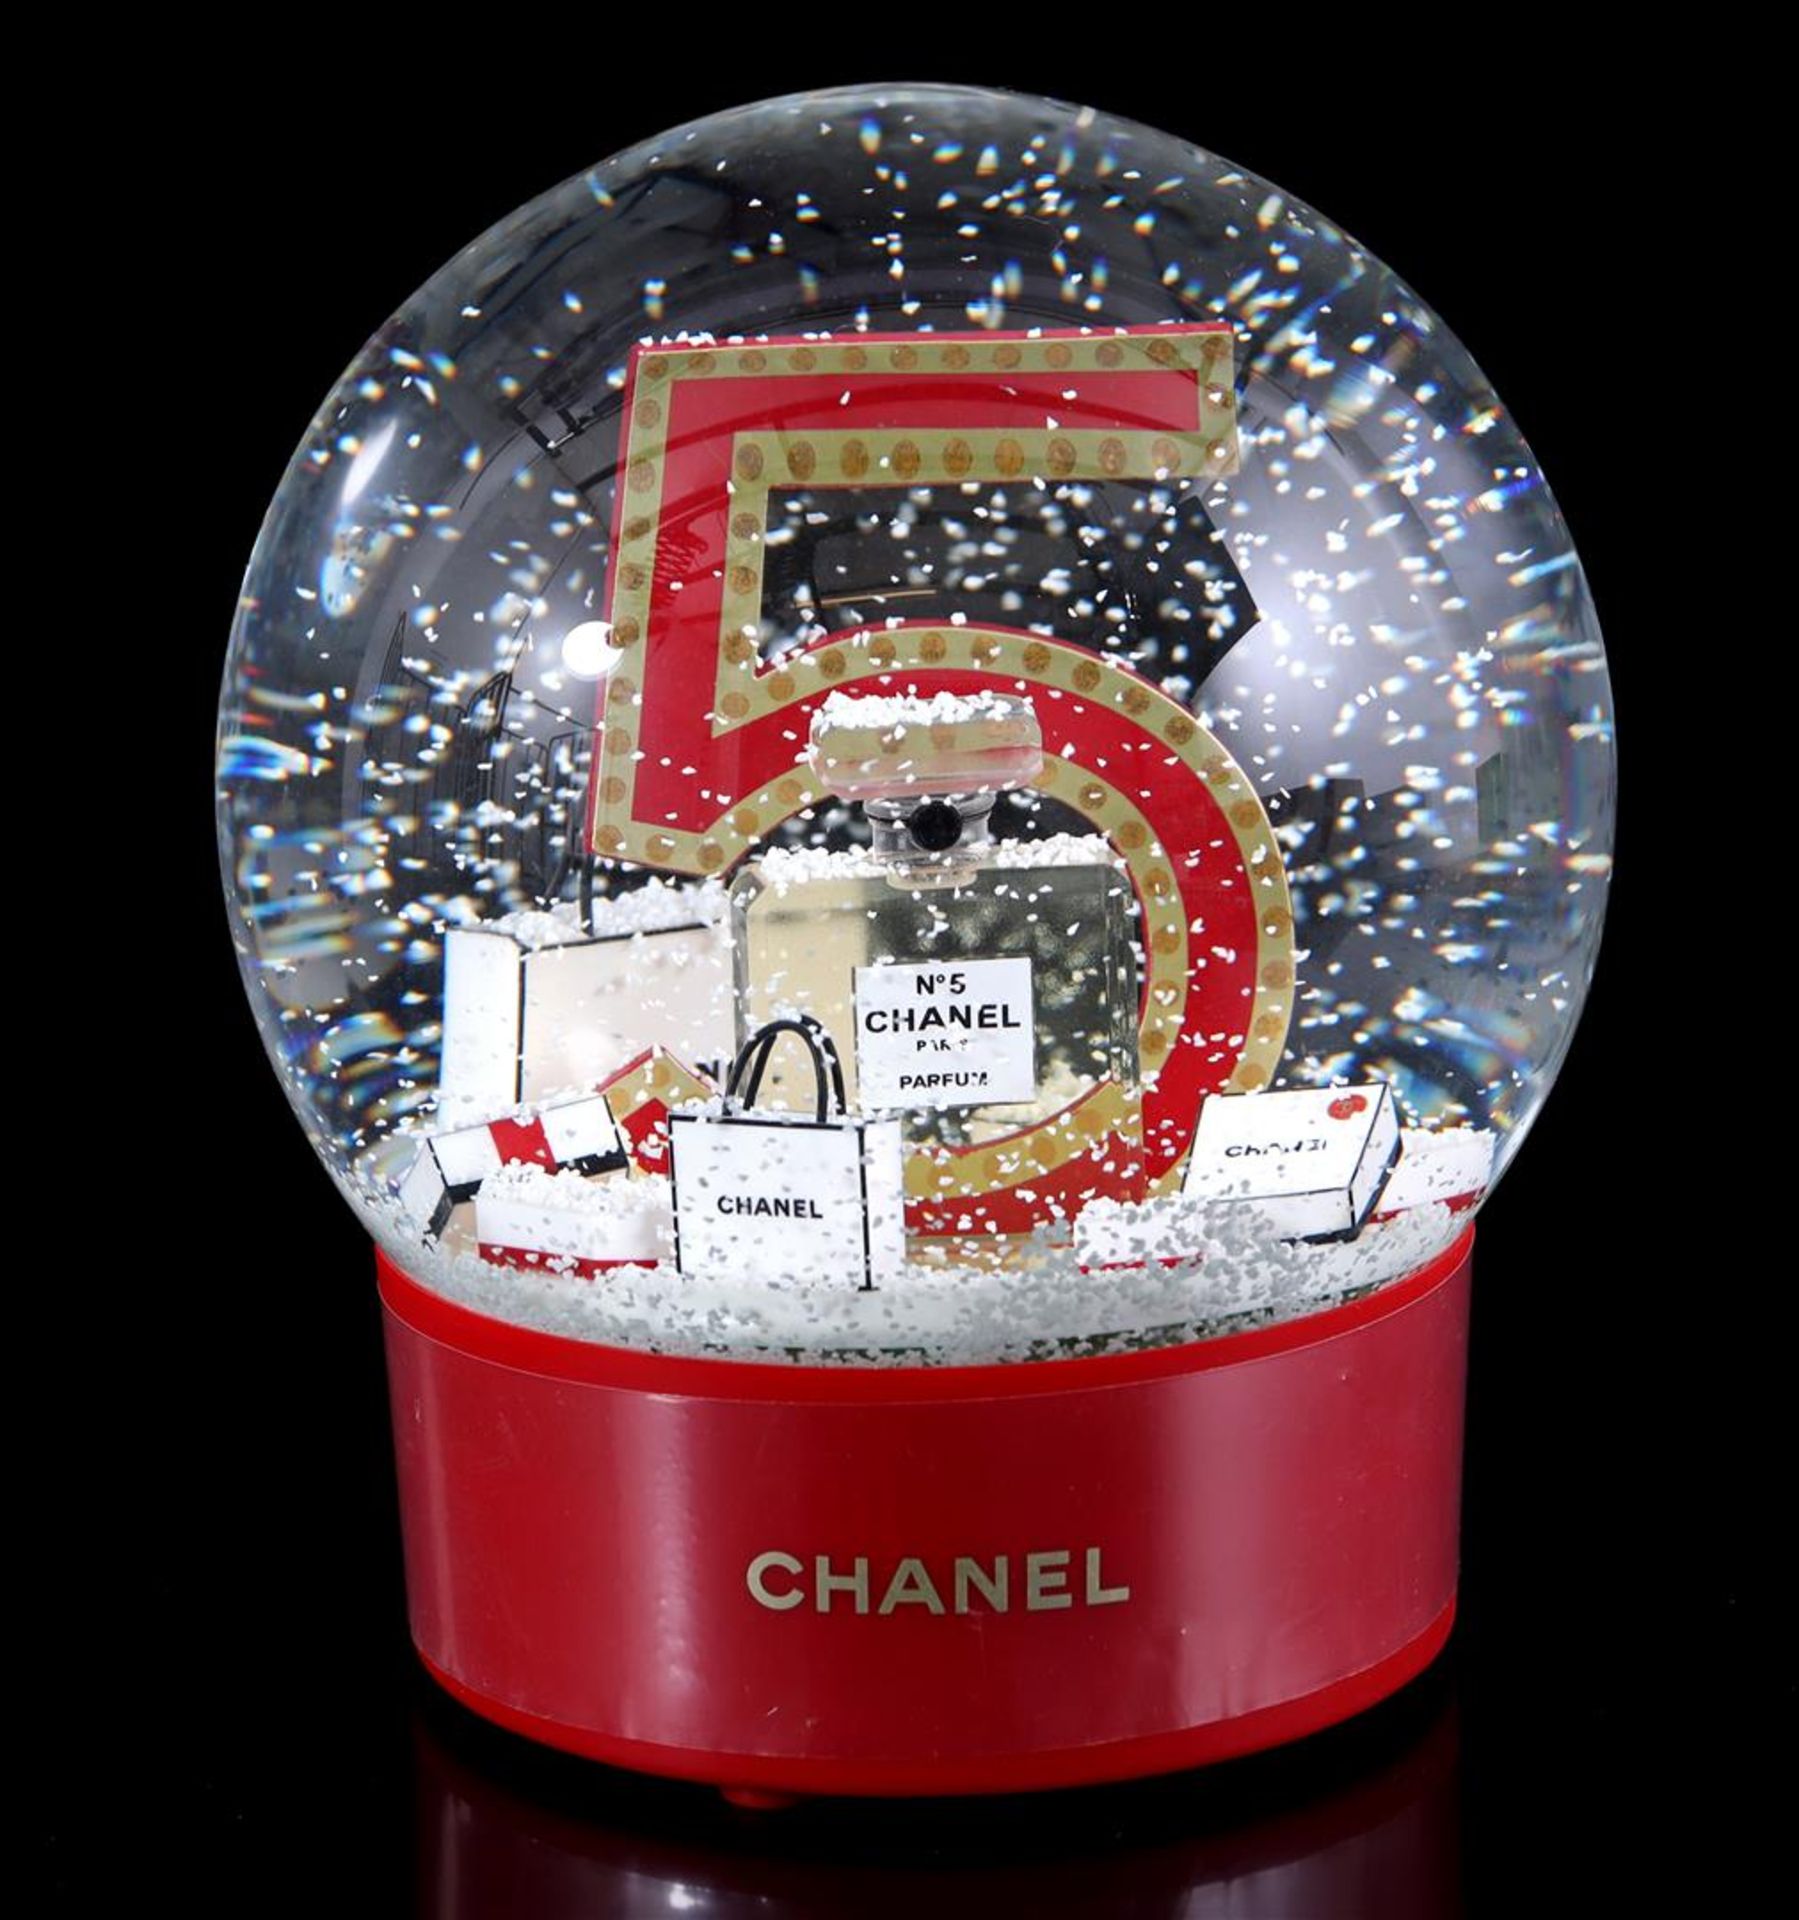 Chanel snowball 